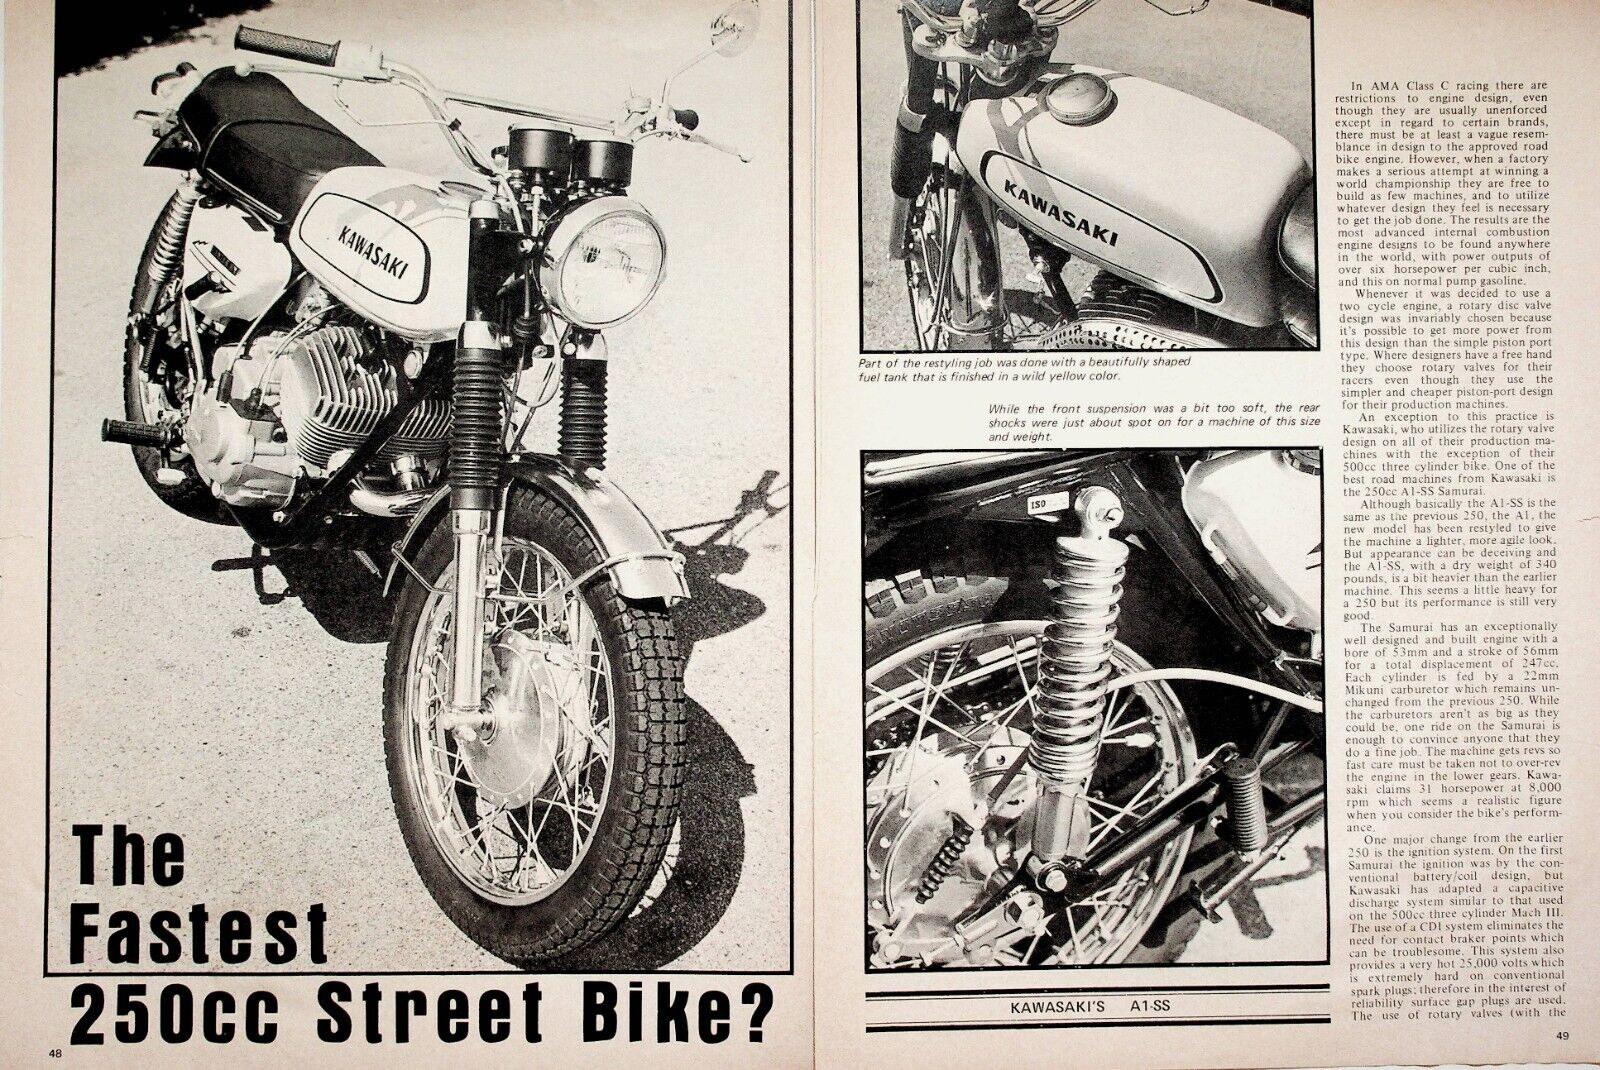 1970 Kawasaki Samurai 250 Street Bike A1-SS - 4-Page Vintage Motorcycle Article